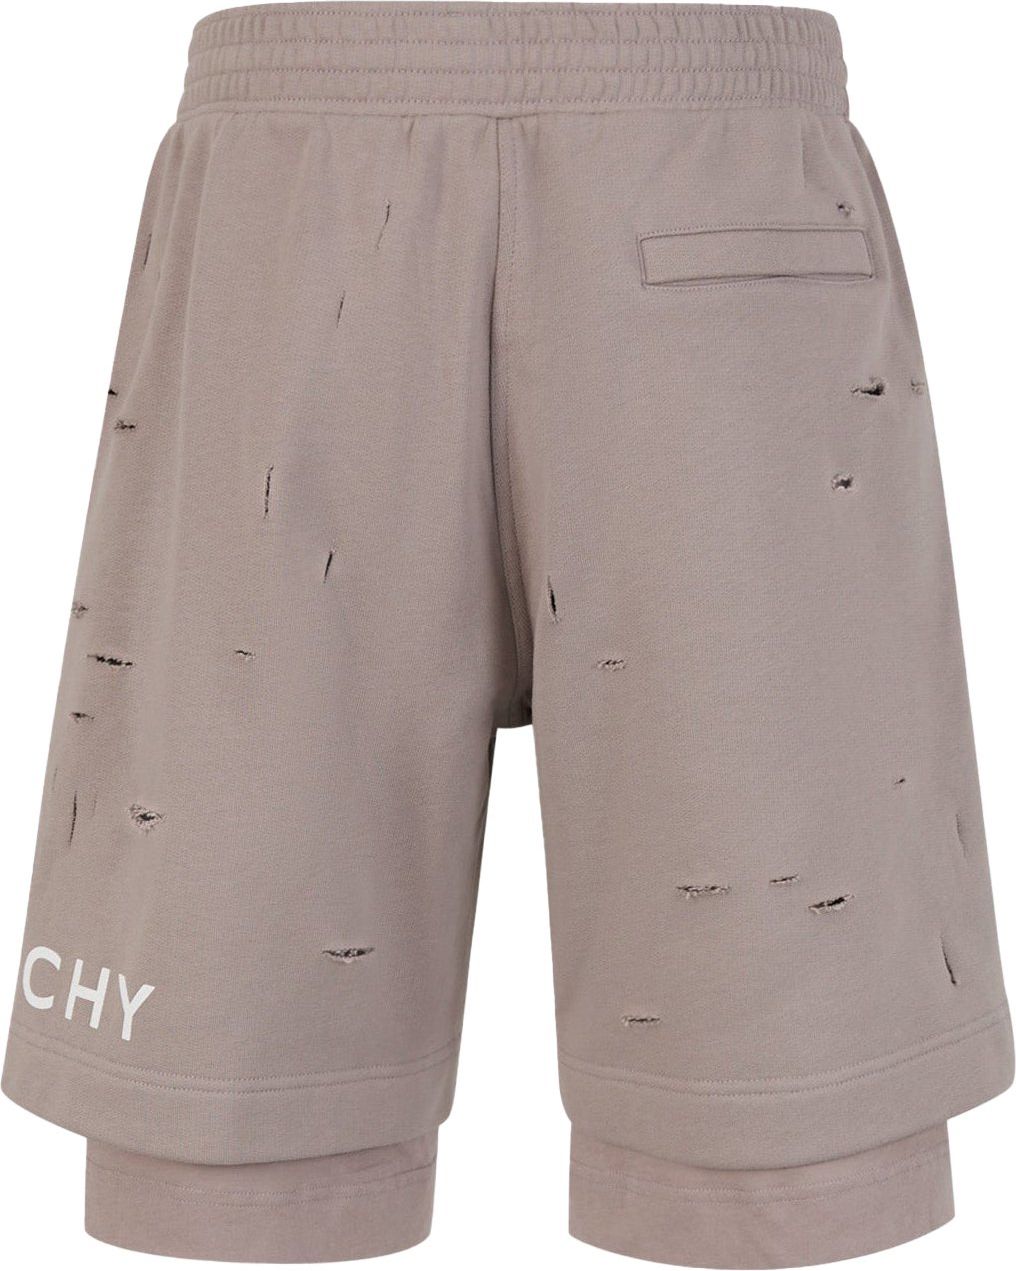 Givenchy Logo Cotton Bermuda Shorts Taupe